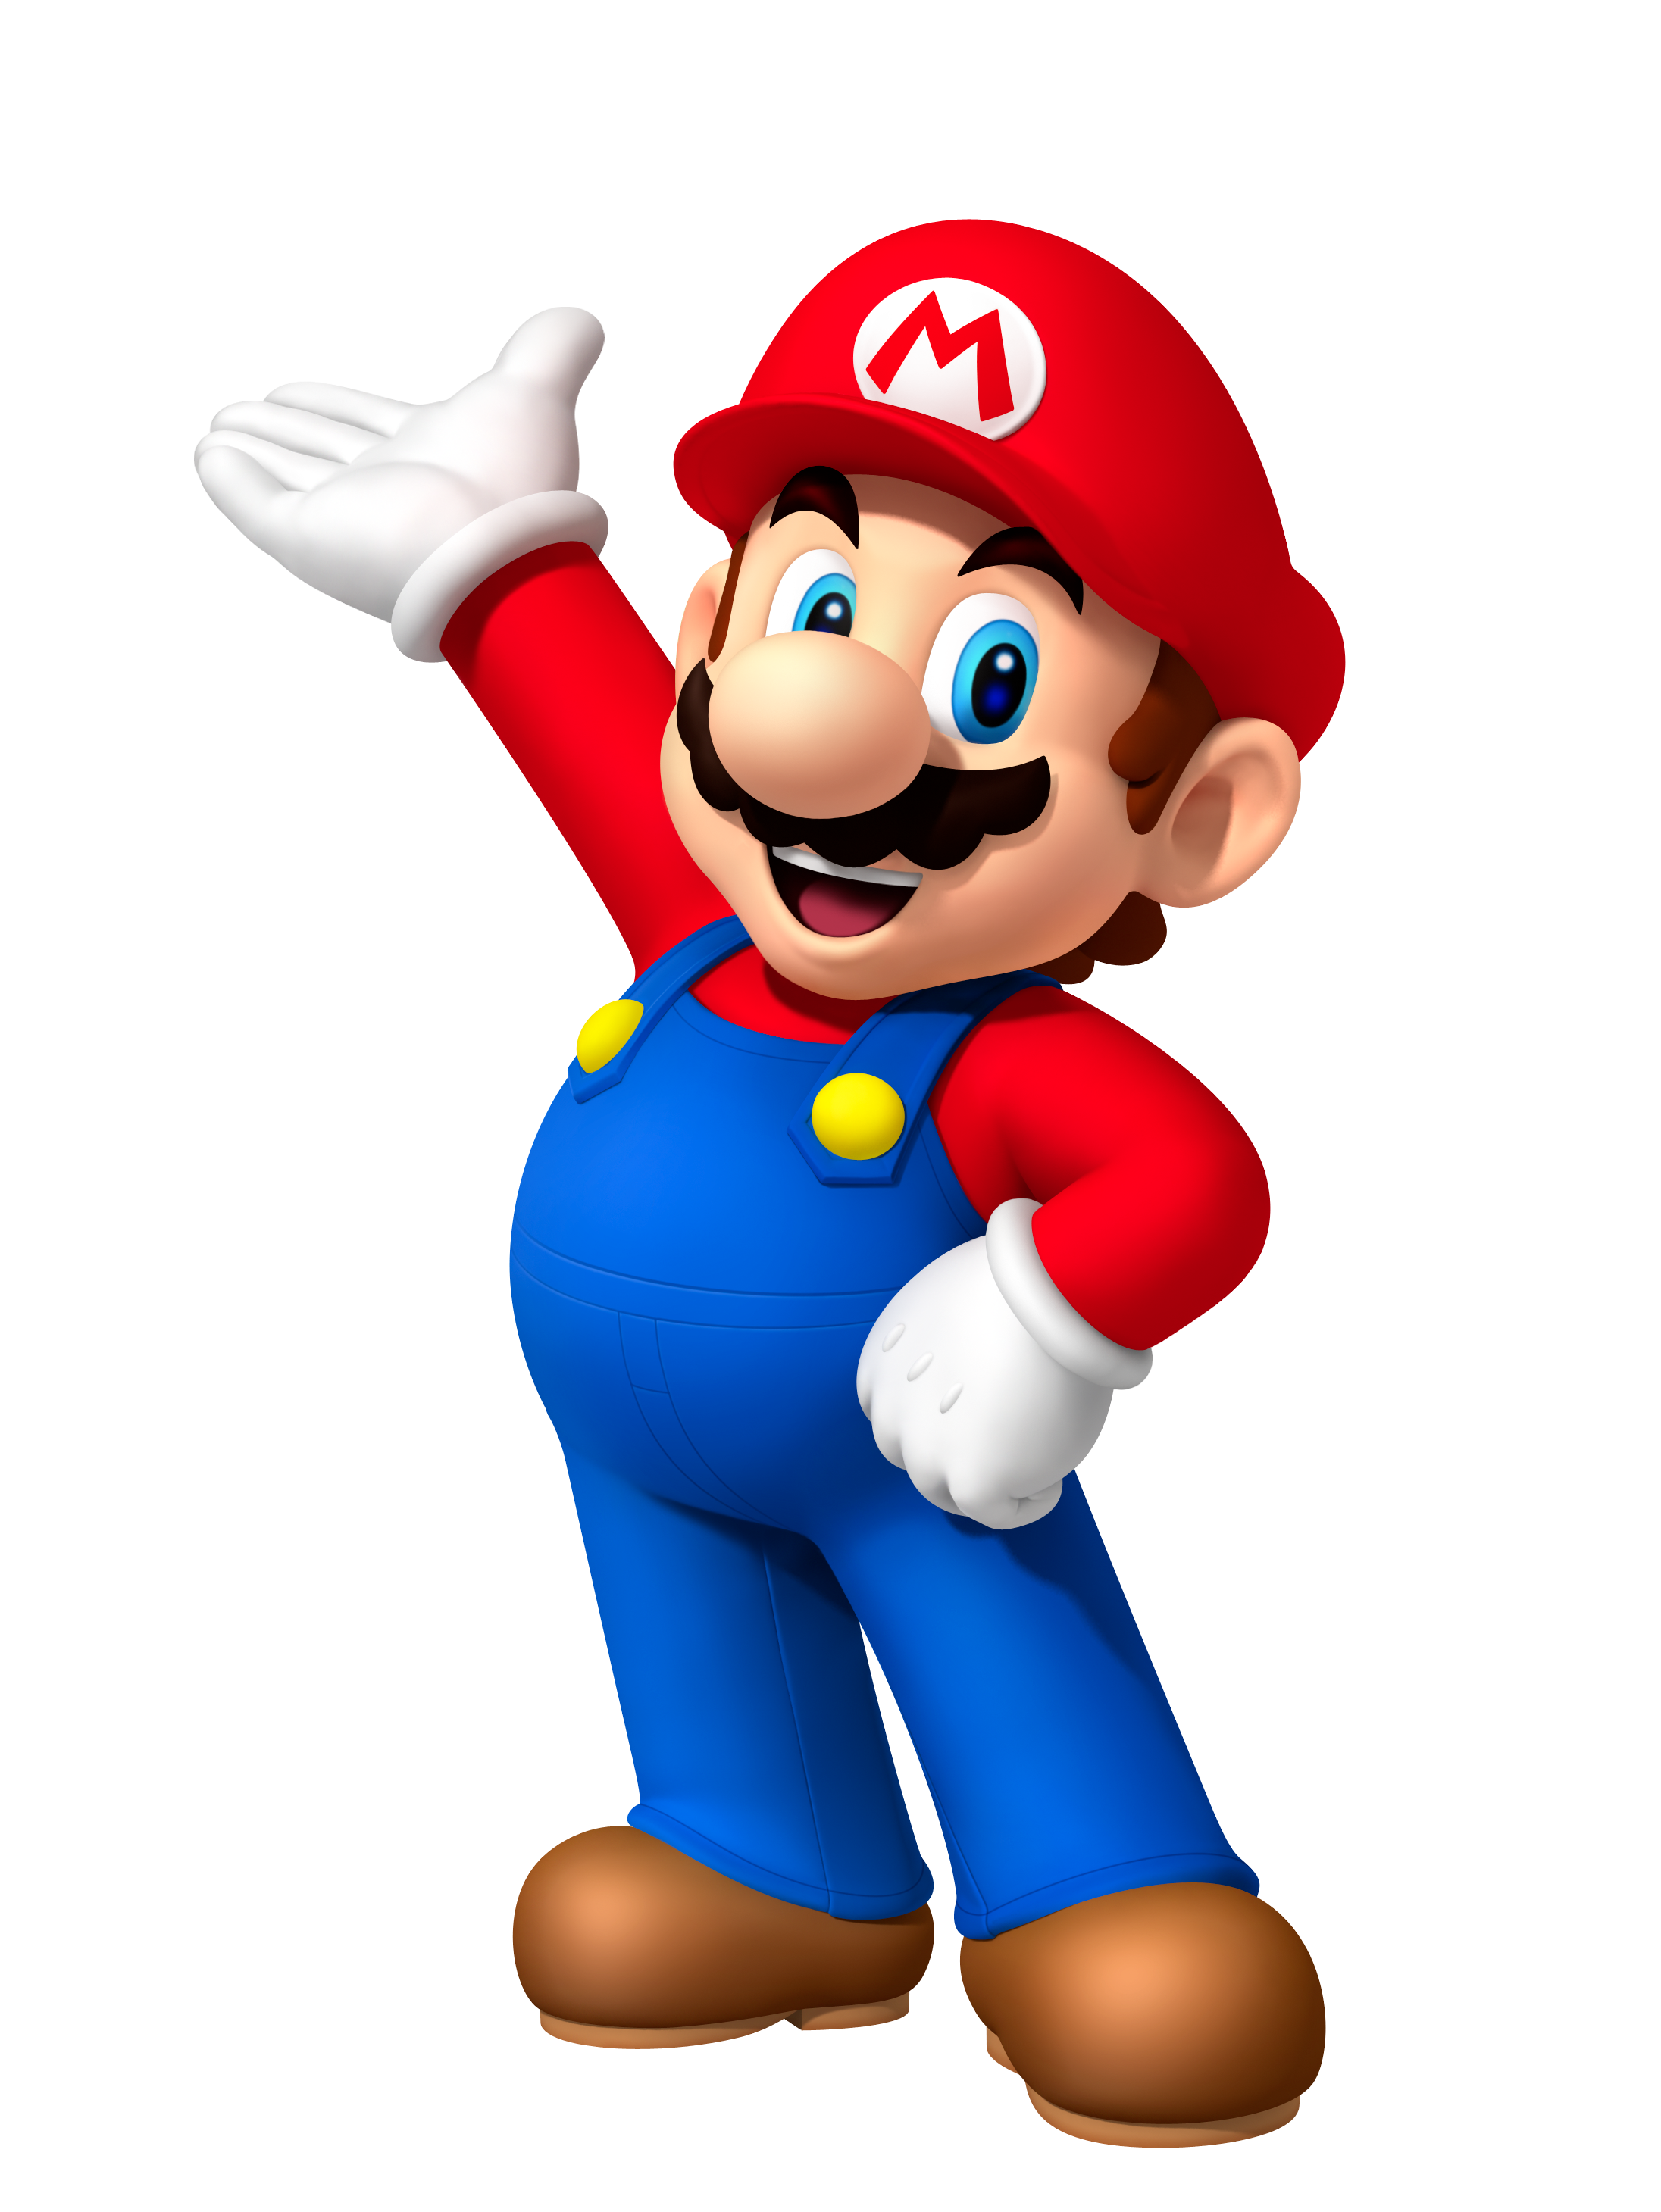 Mario PNG imagen transparente